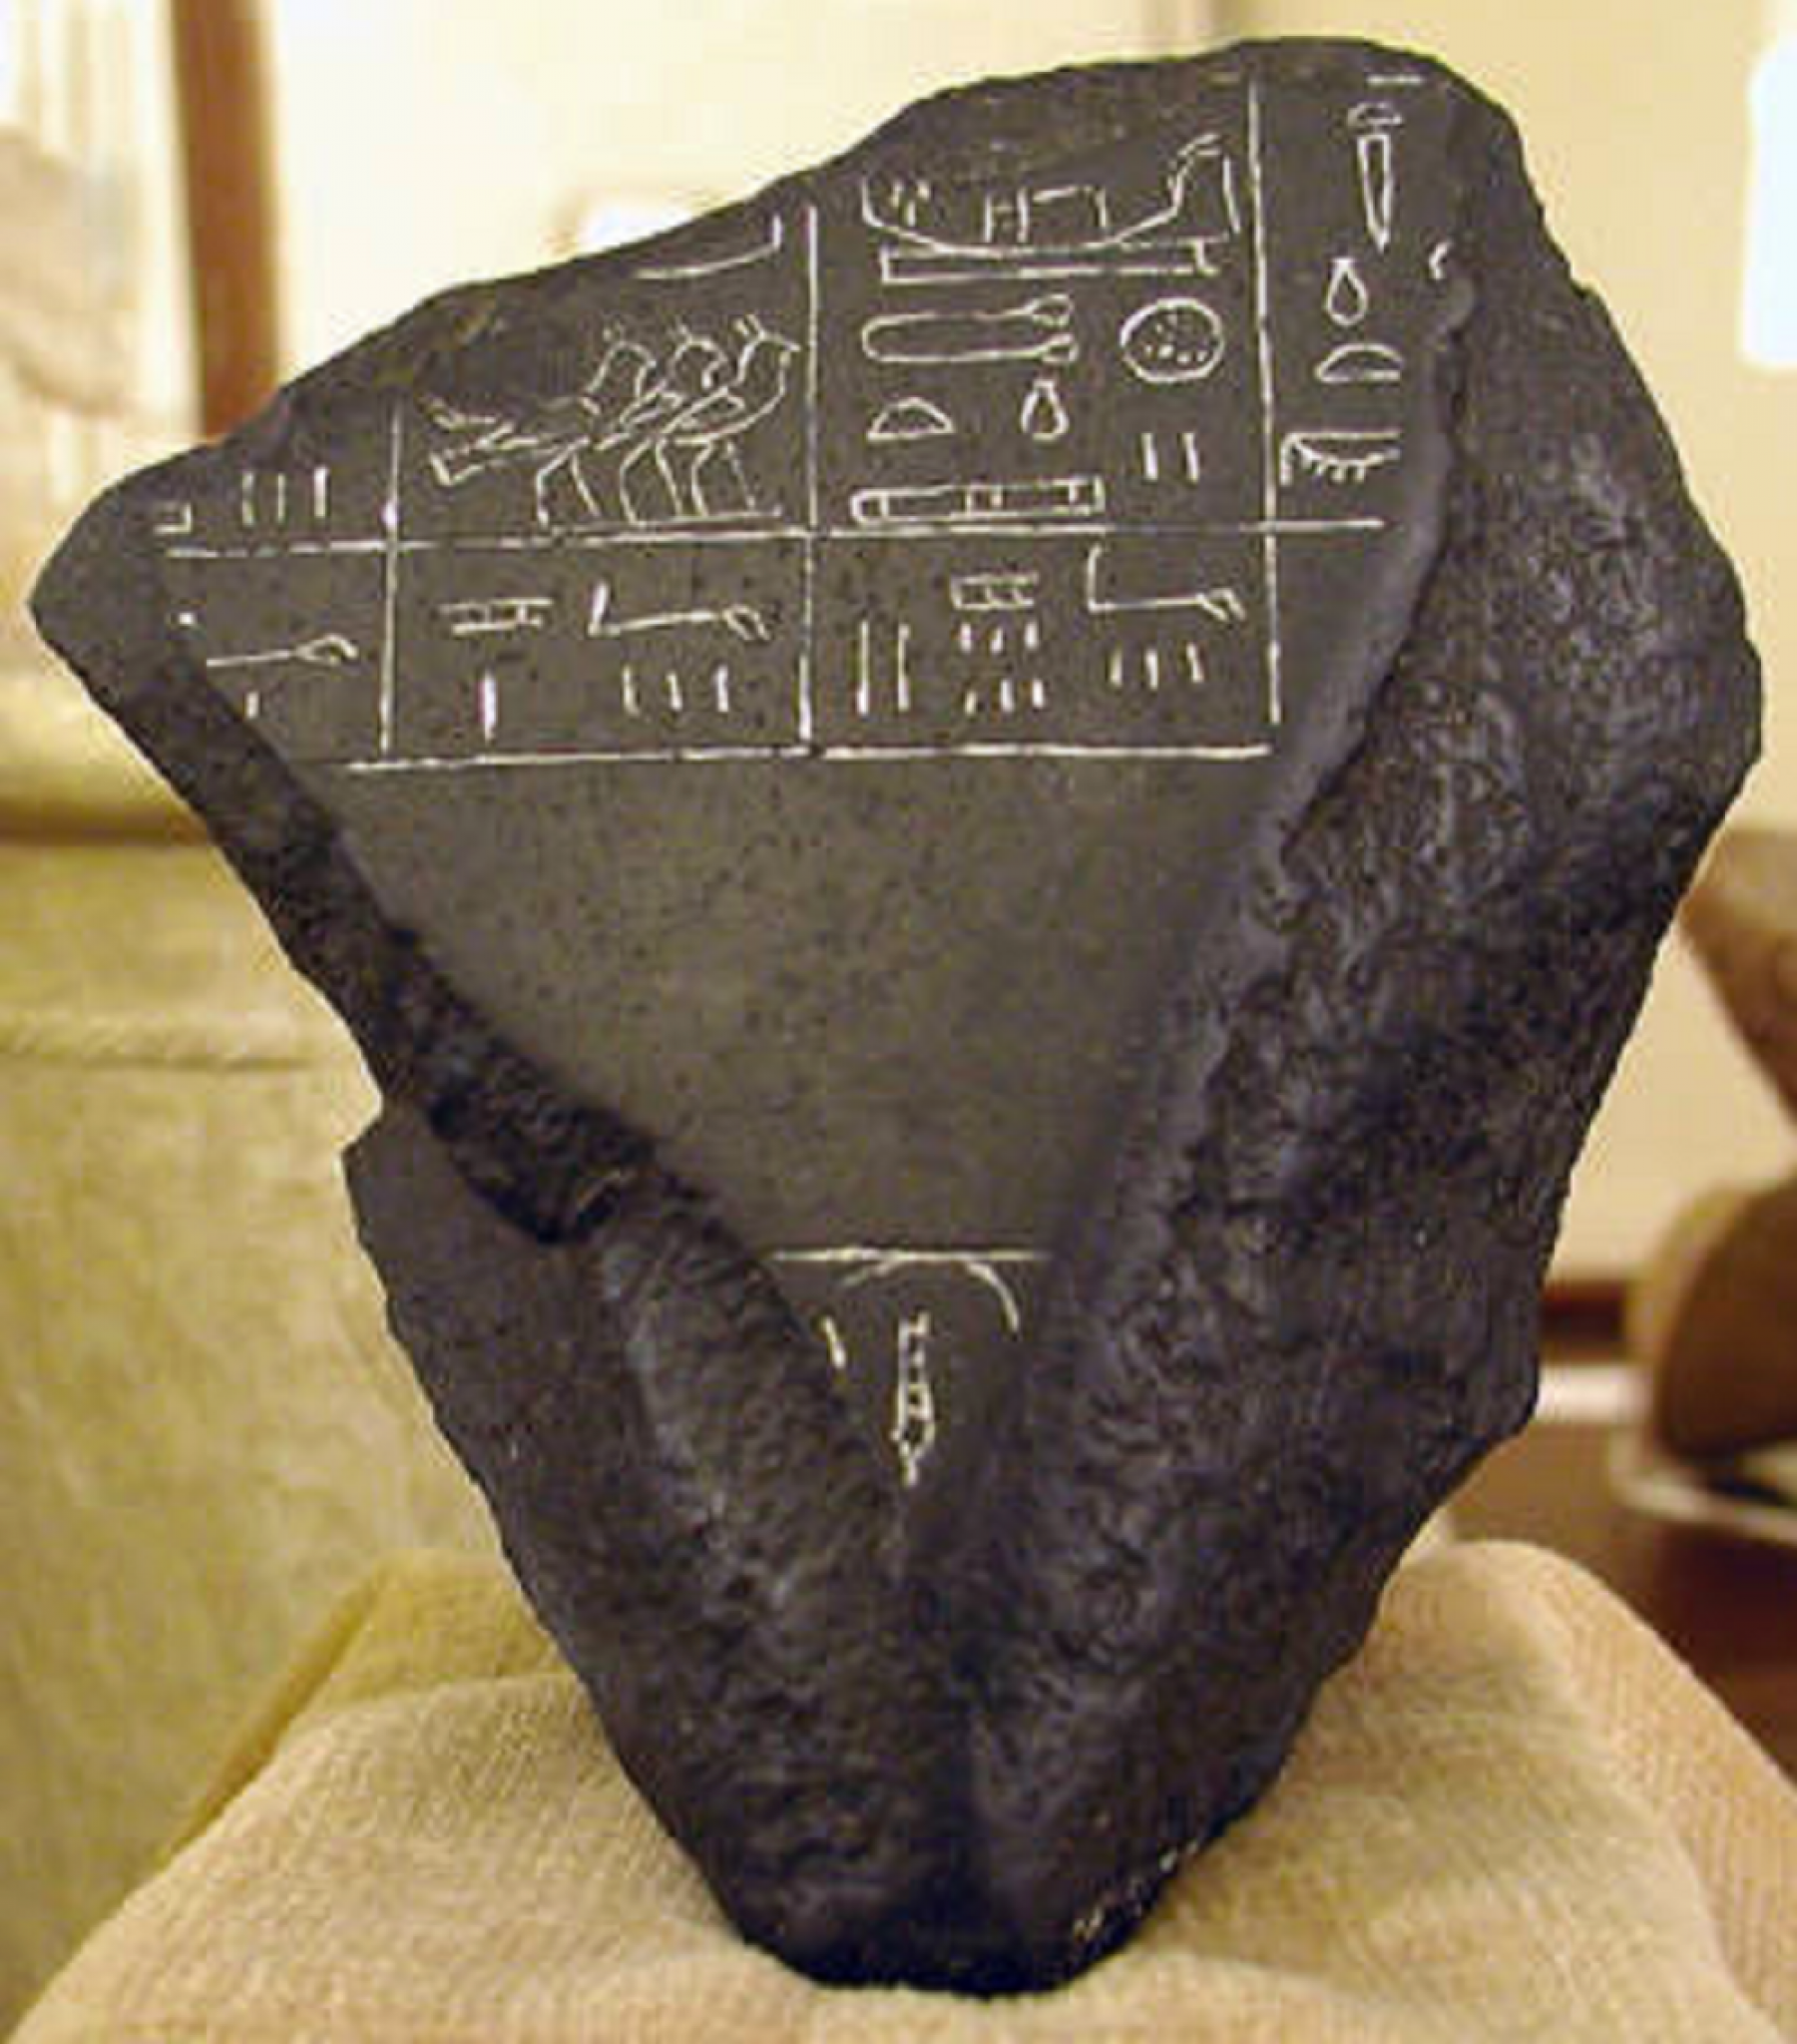 Palermski kamen, drevna civilizacija, zapisi